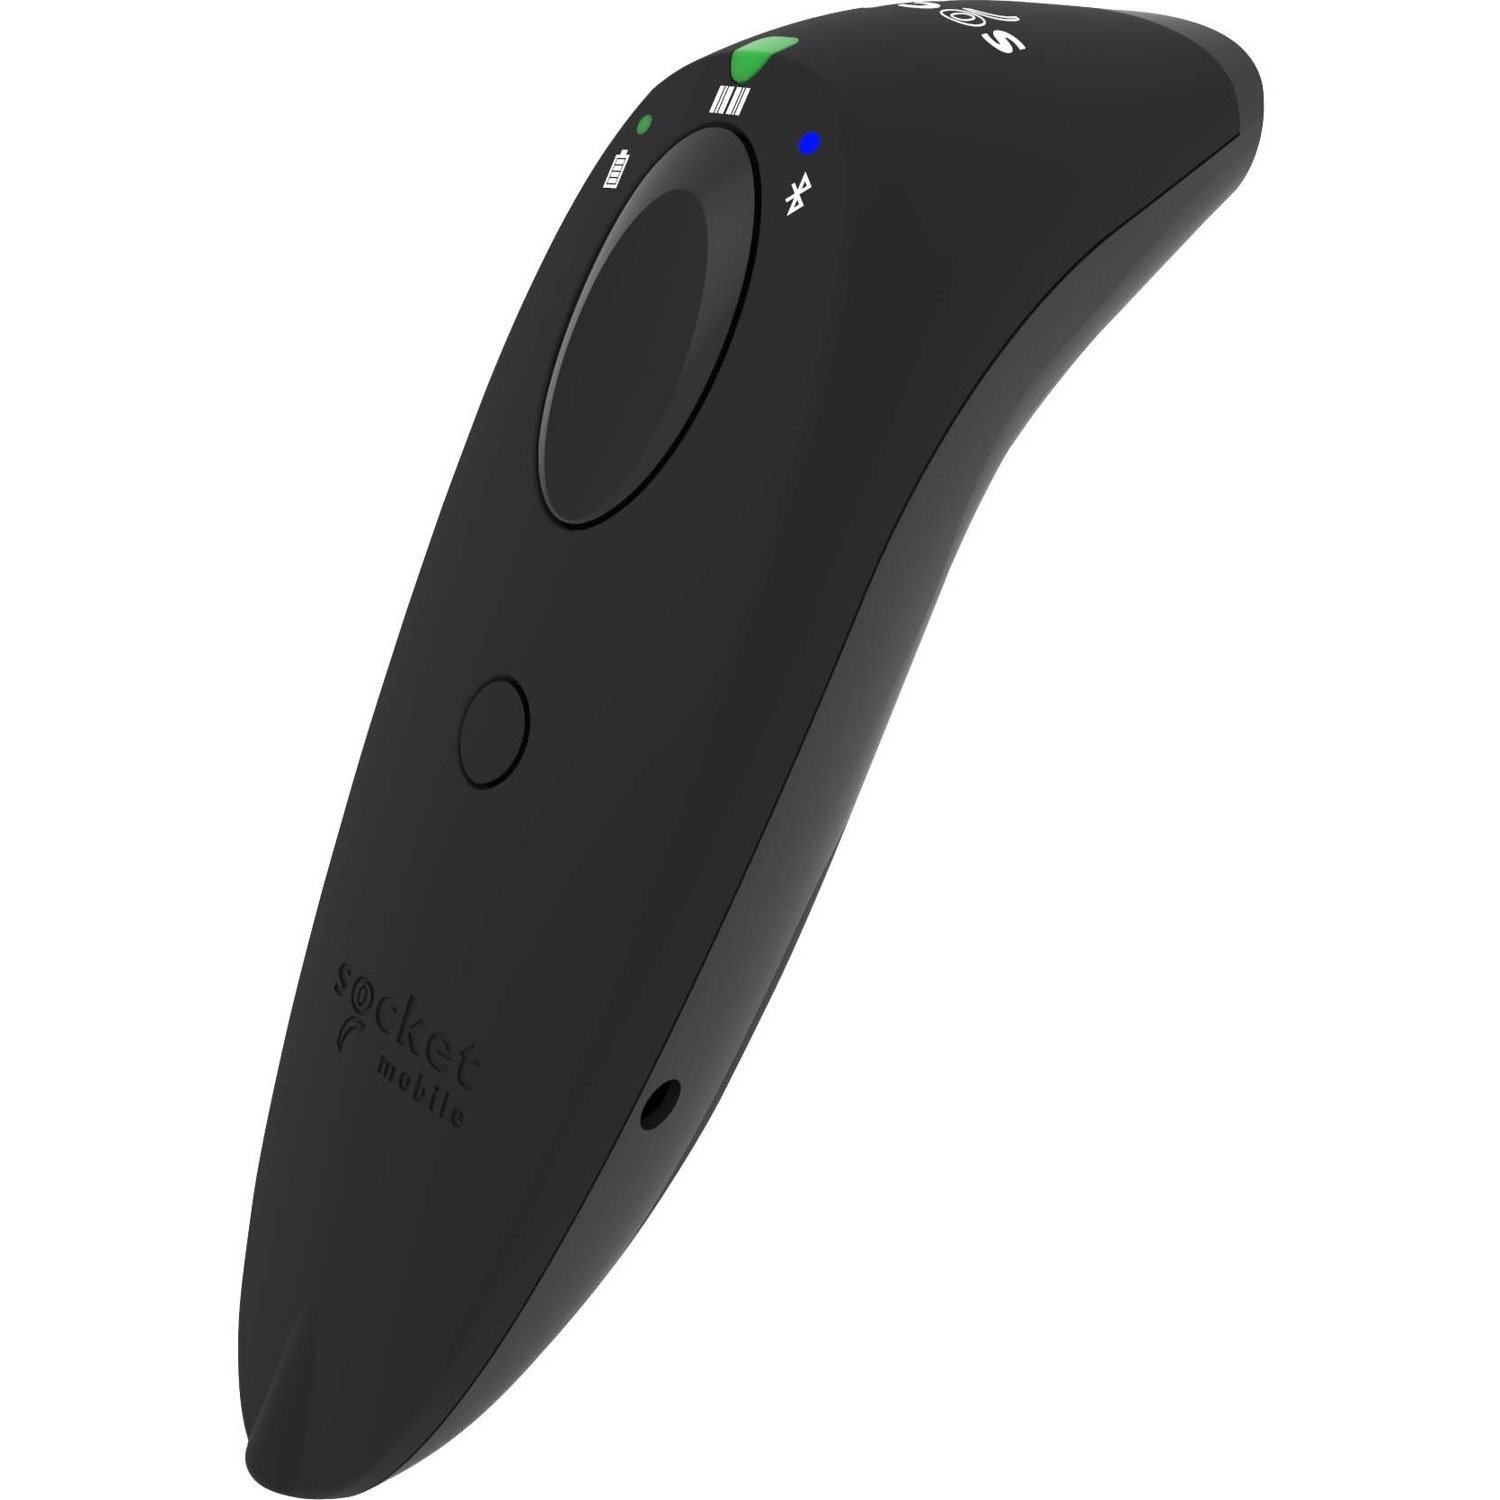 Socket Mobile SocketScan S730 Handheld Barcode Scanner - Wireless Connectivity - Black